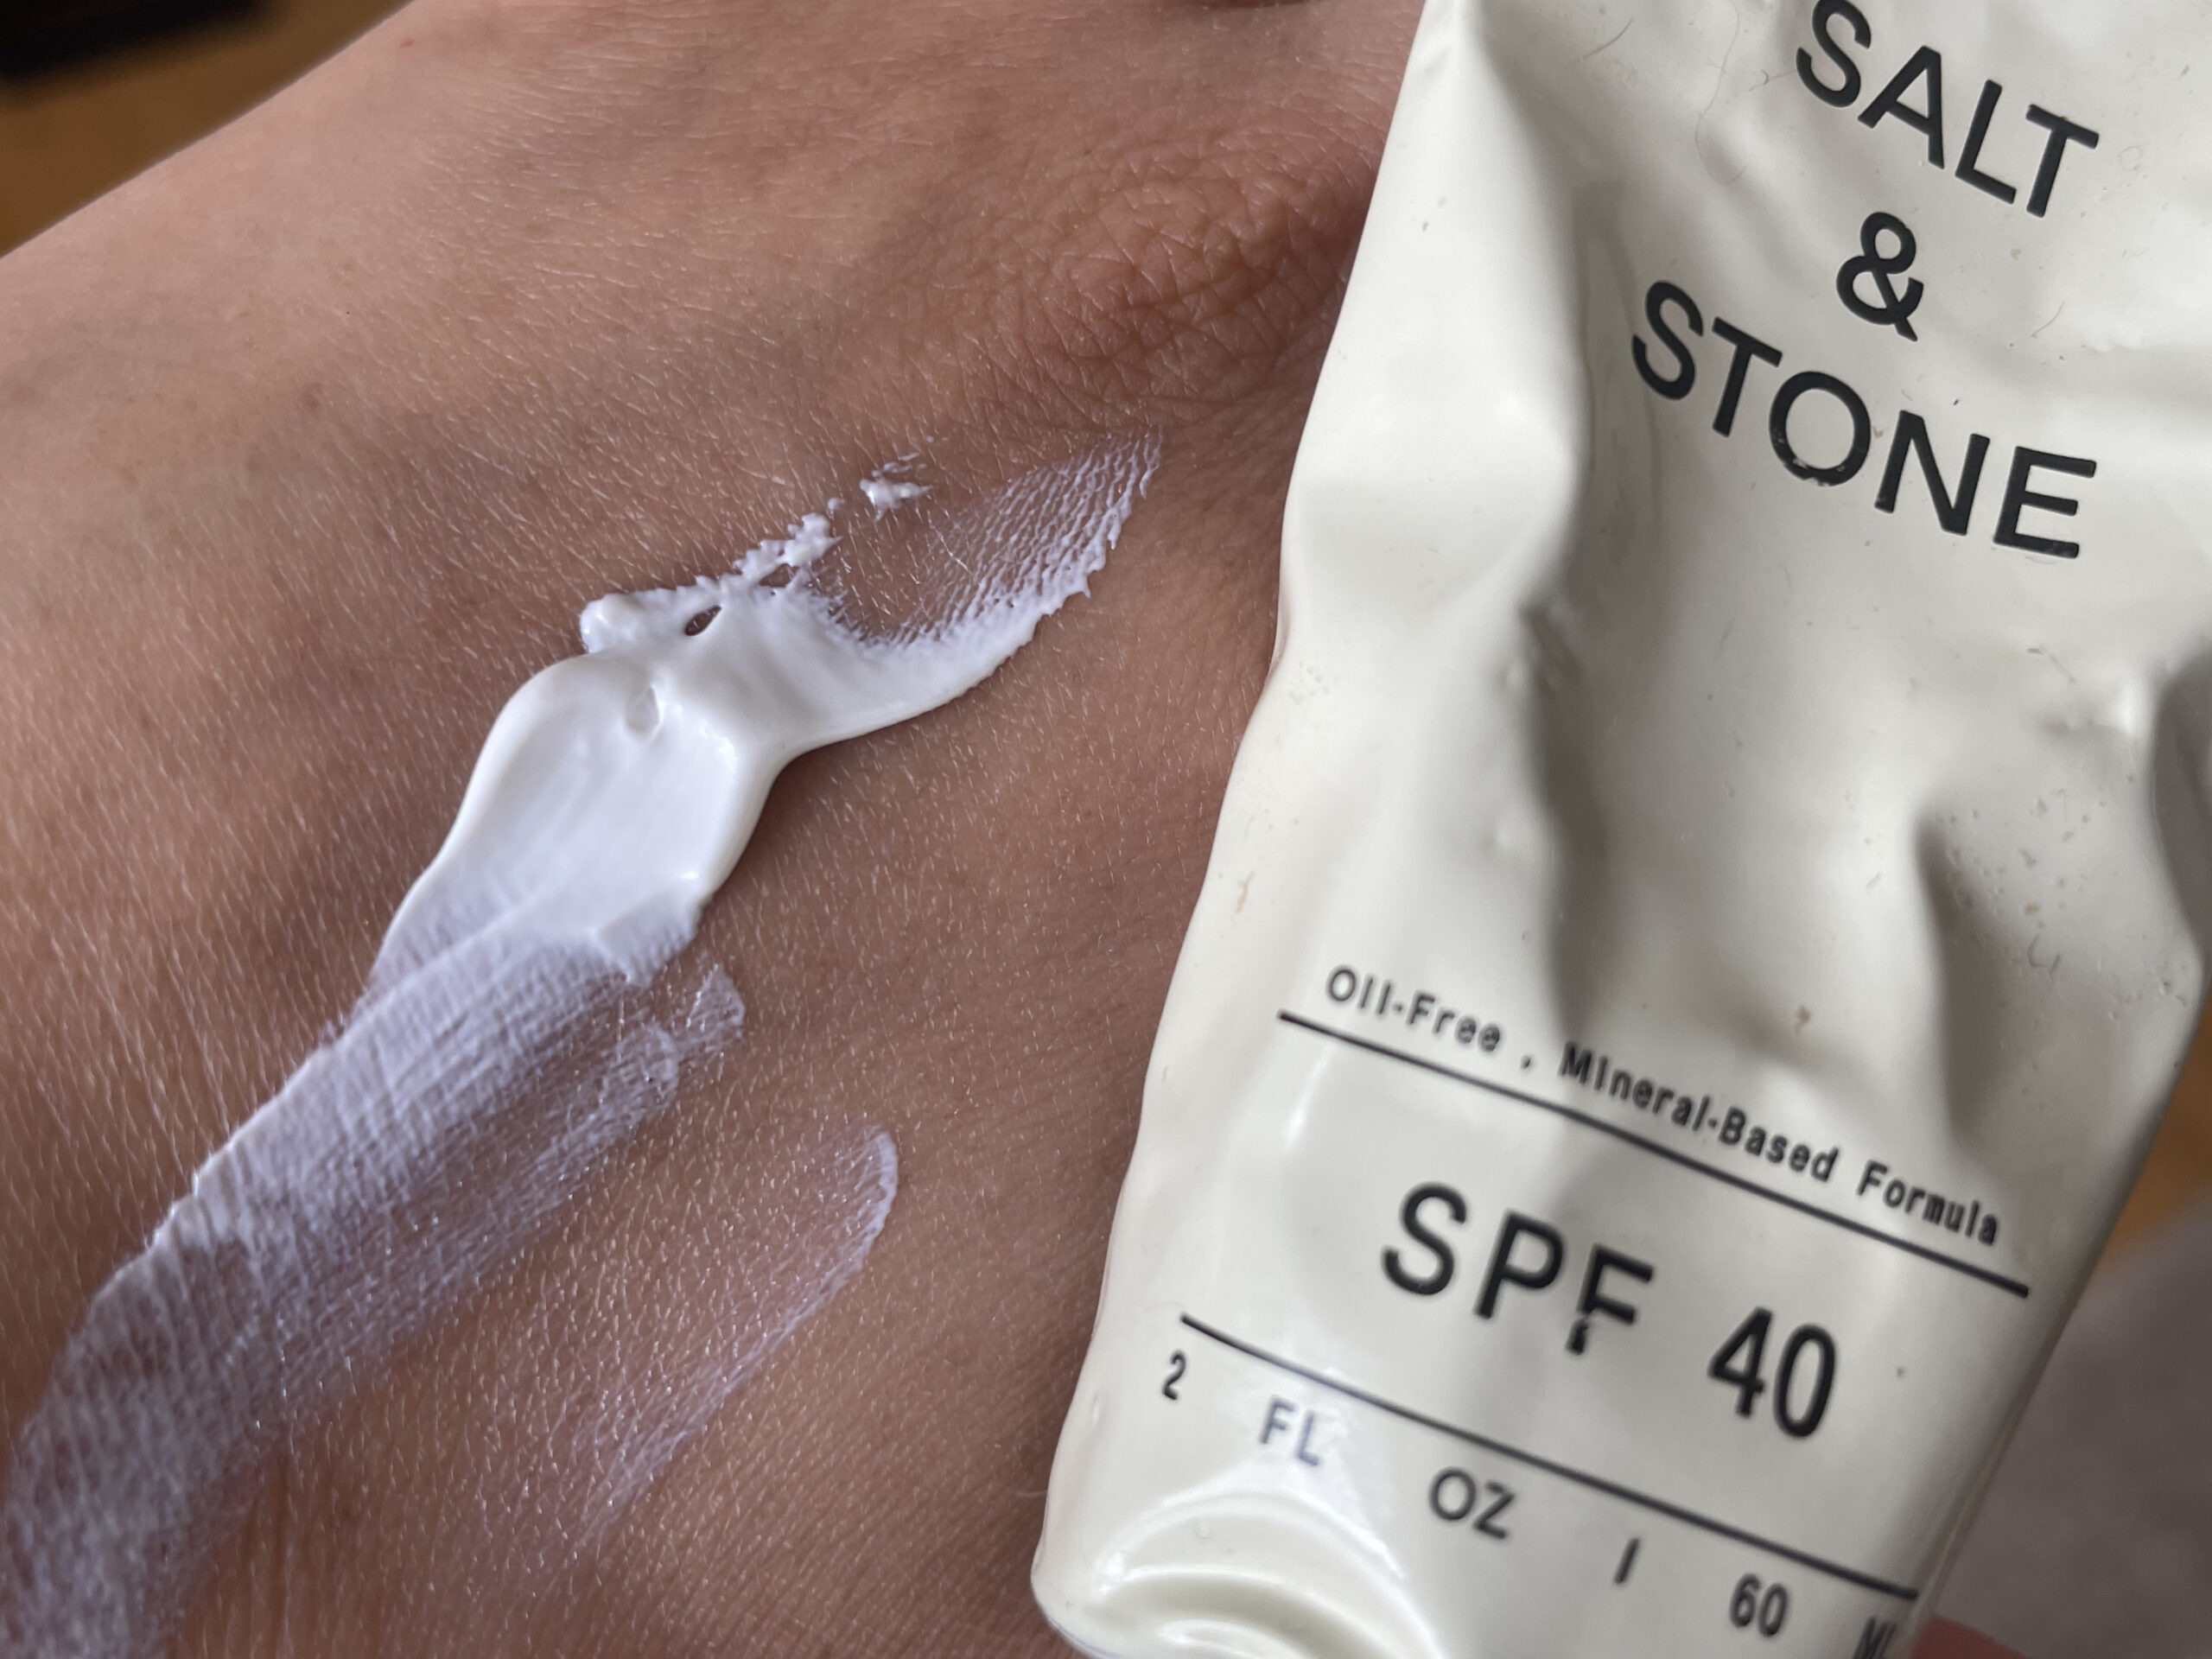 Salt and stone sunscreen